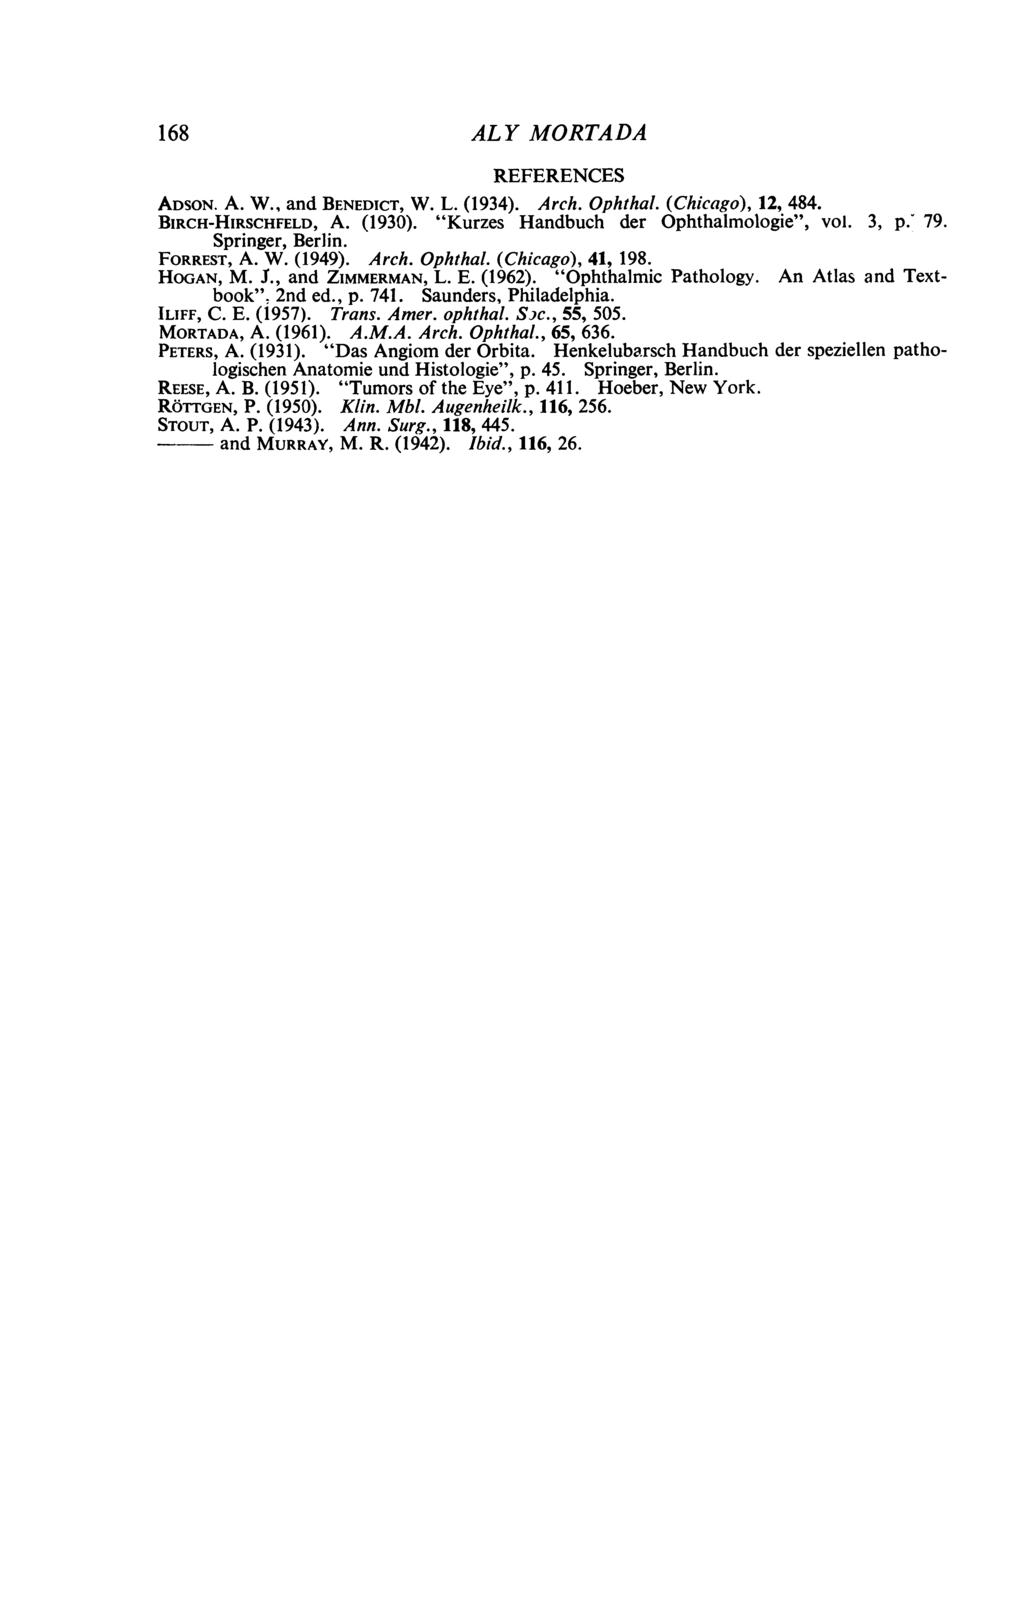 168 ALY MORTADA REFERENCES ADSON. A. W., and BENEDICT, W. L. (1934). Arch. Ophthal. (Chicago), 12, 484. BIRCH-HIRSCHFELD, A. (1930). "Kurzes Handbuch der Ophthalmologie", vol. 3, p.' 79.